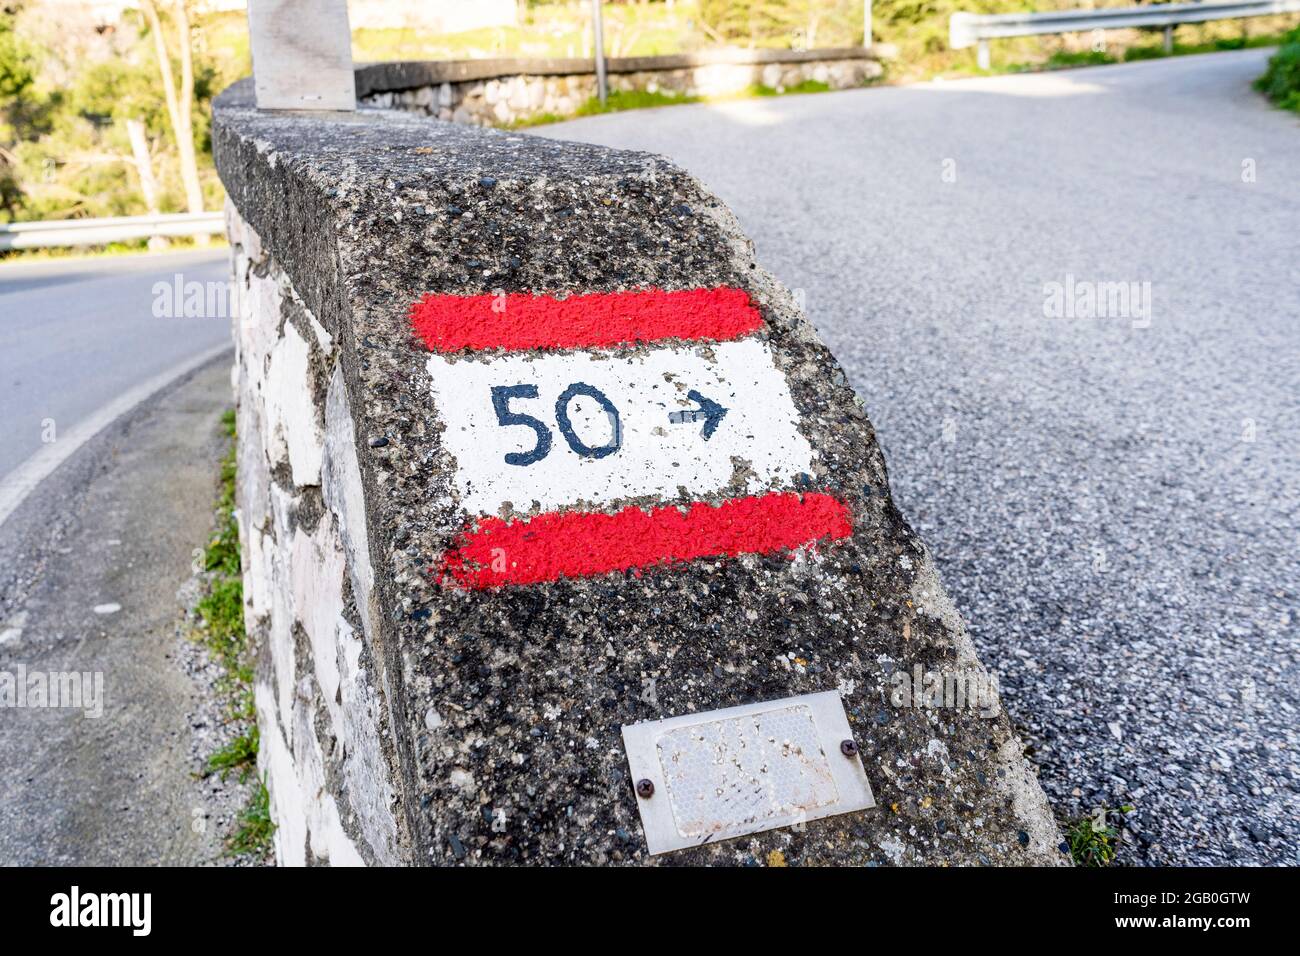 Rote und weiße Markierung, Wegweiser des Club Alpino Italiano, in der Via di Campiglia Vecchia, Campiglia Marittima, Toskana, Italien Stockfoto